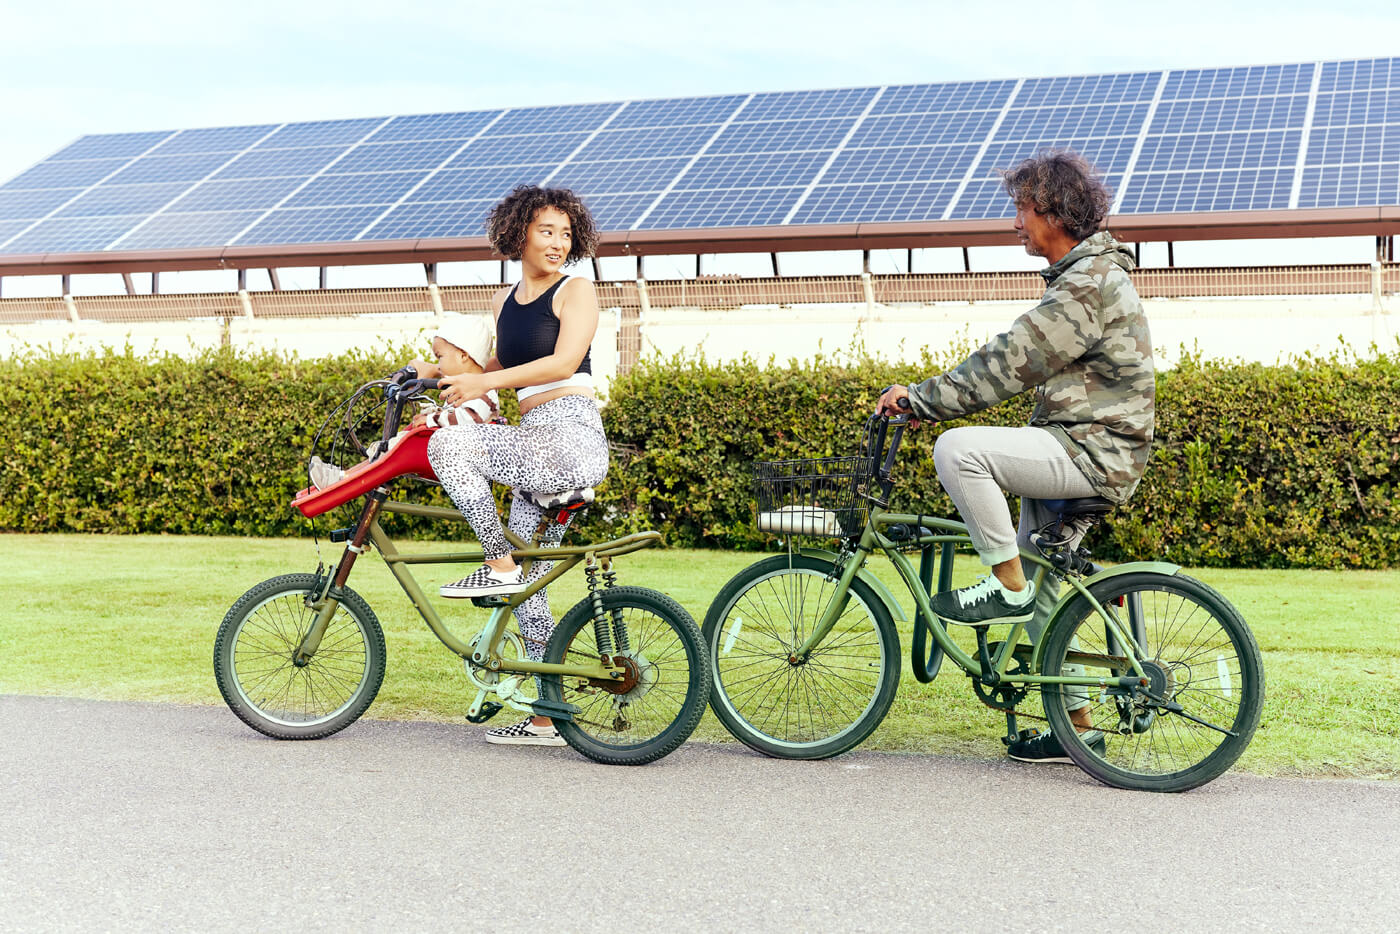 Cycling near community solar panels